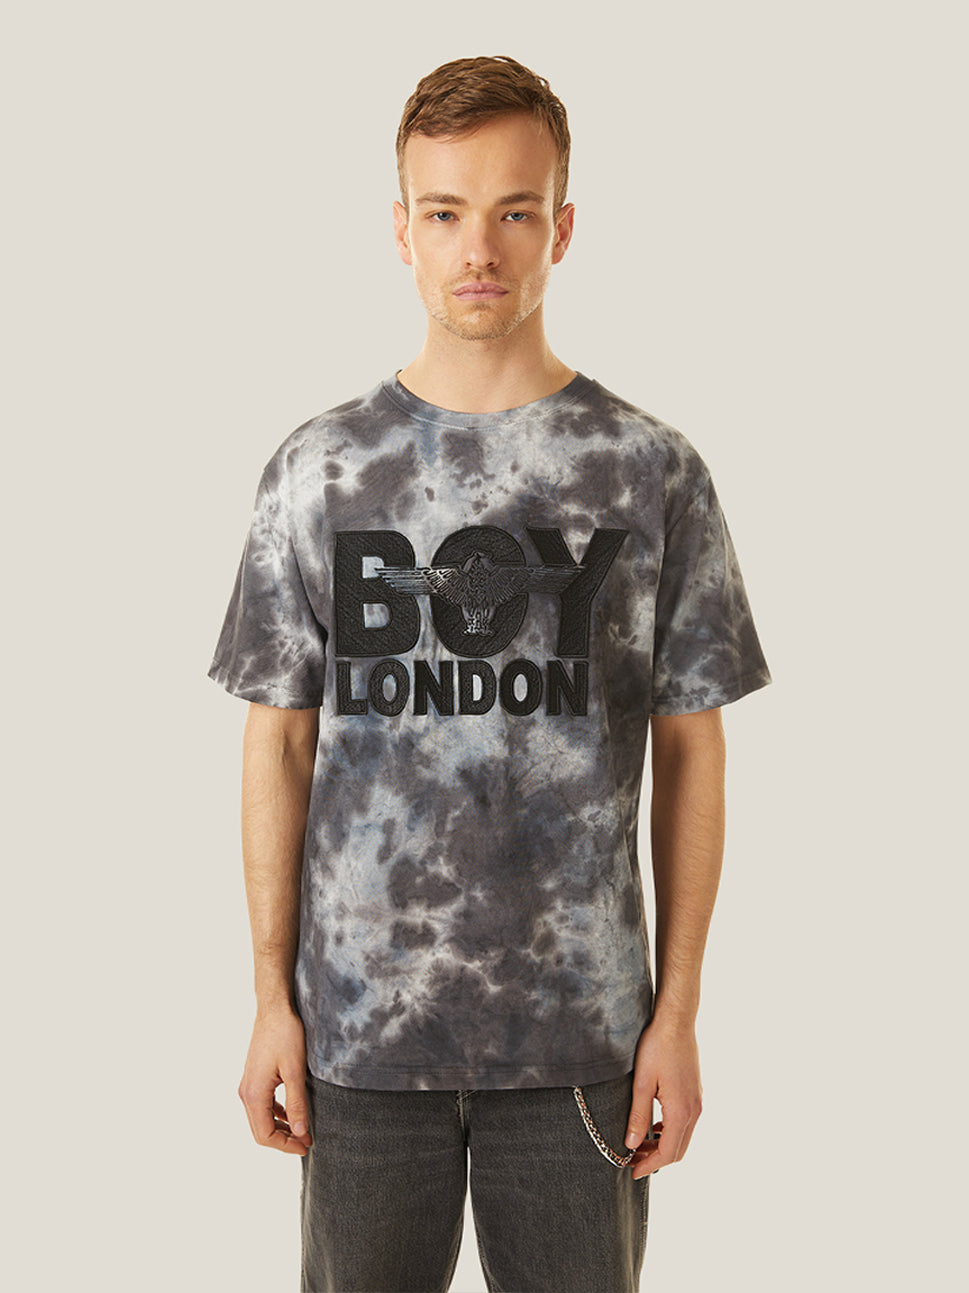 Boy London Midnight Black Grey T Shirt